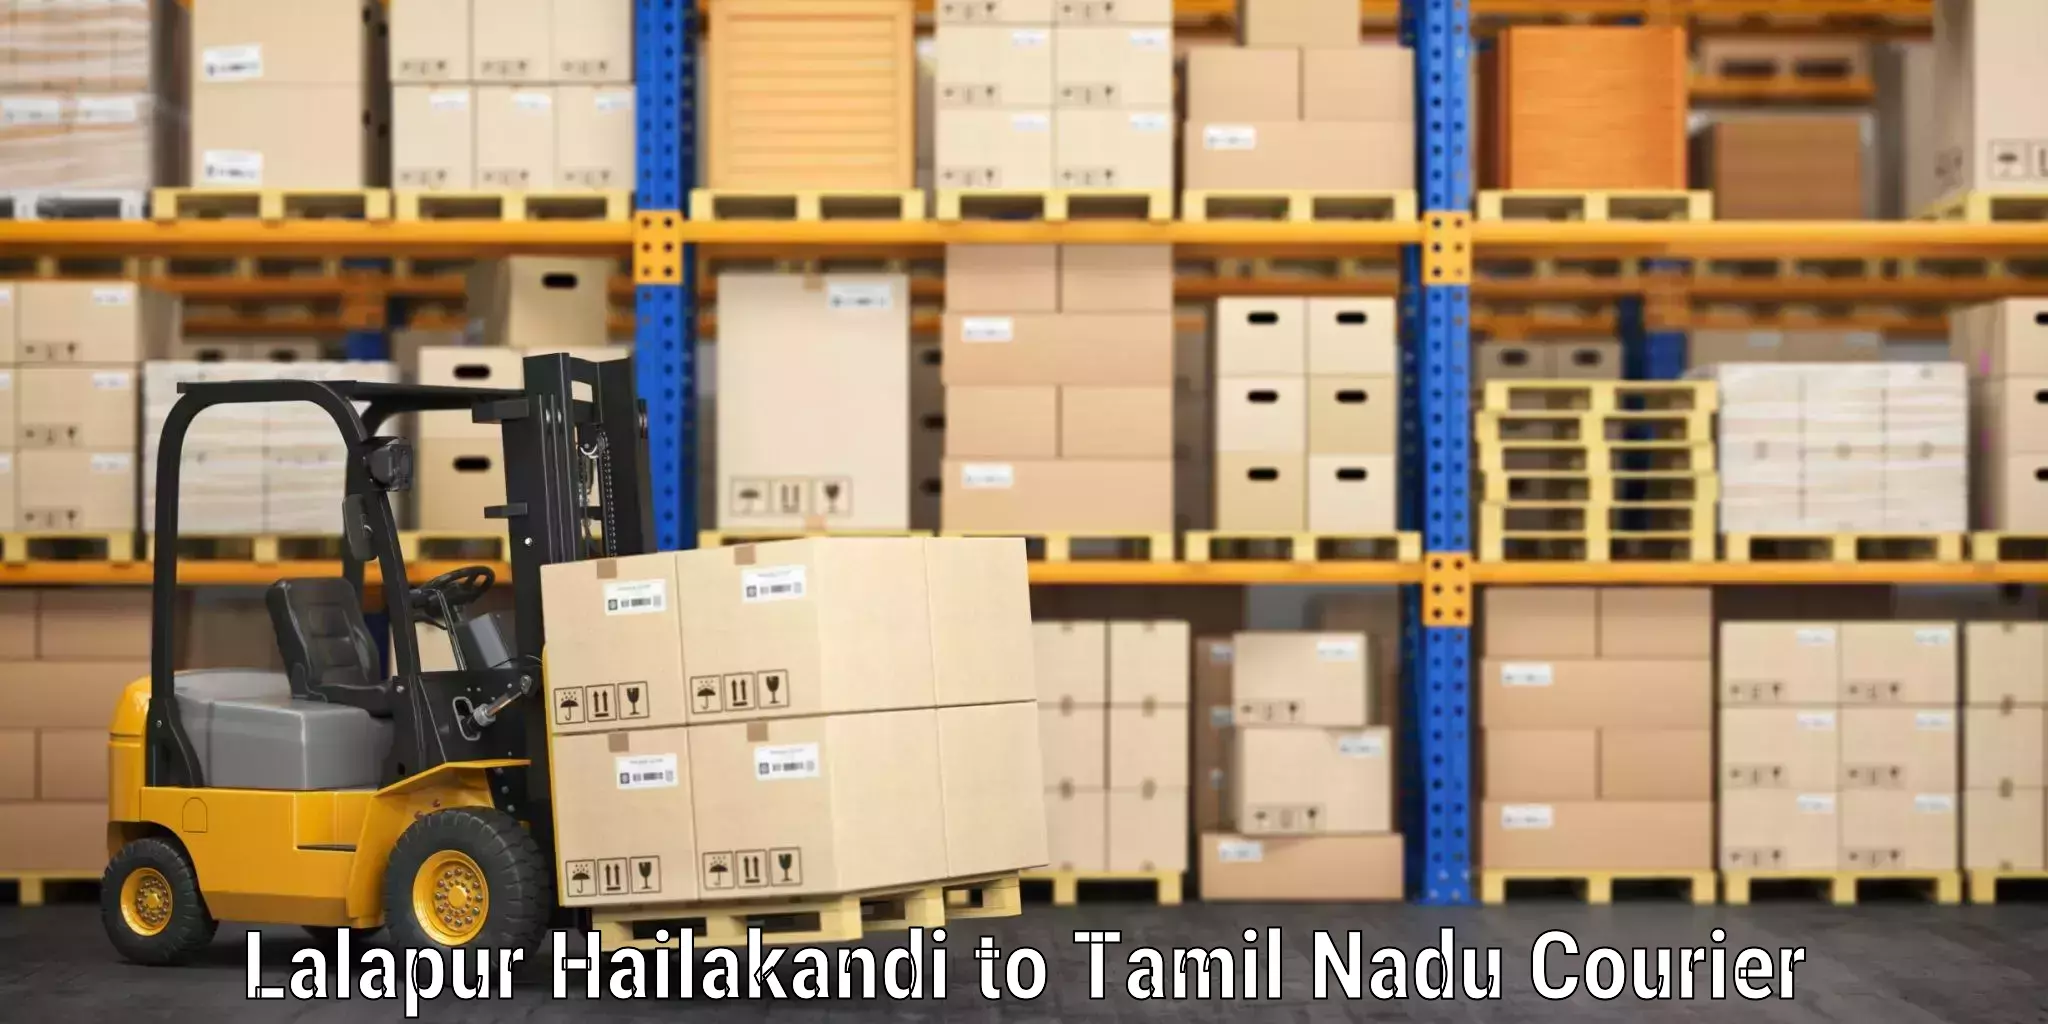 Baggage delivery solutions Lalapur Hailakandi to Batlagundu